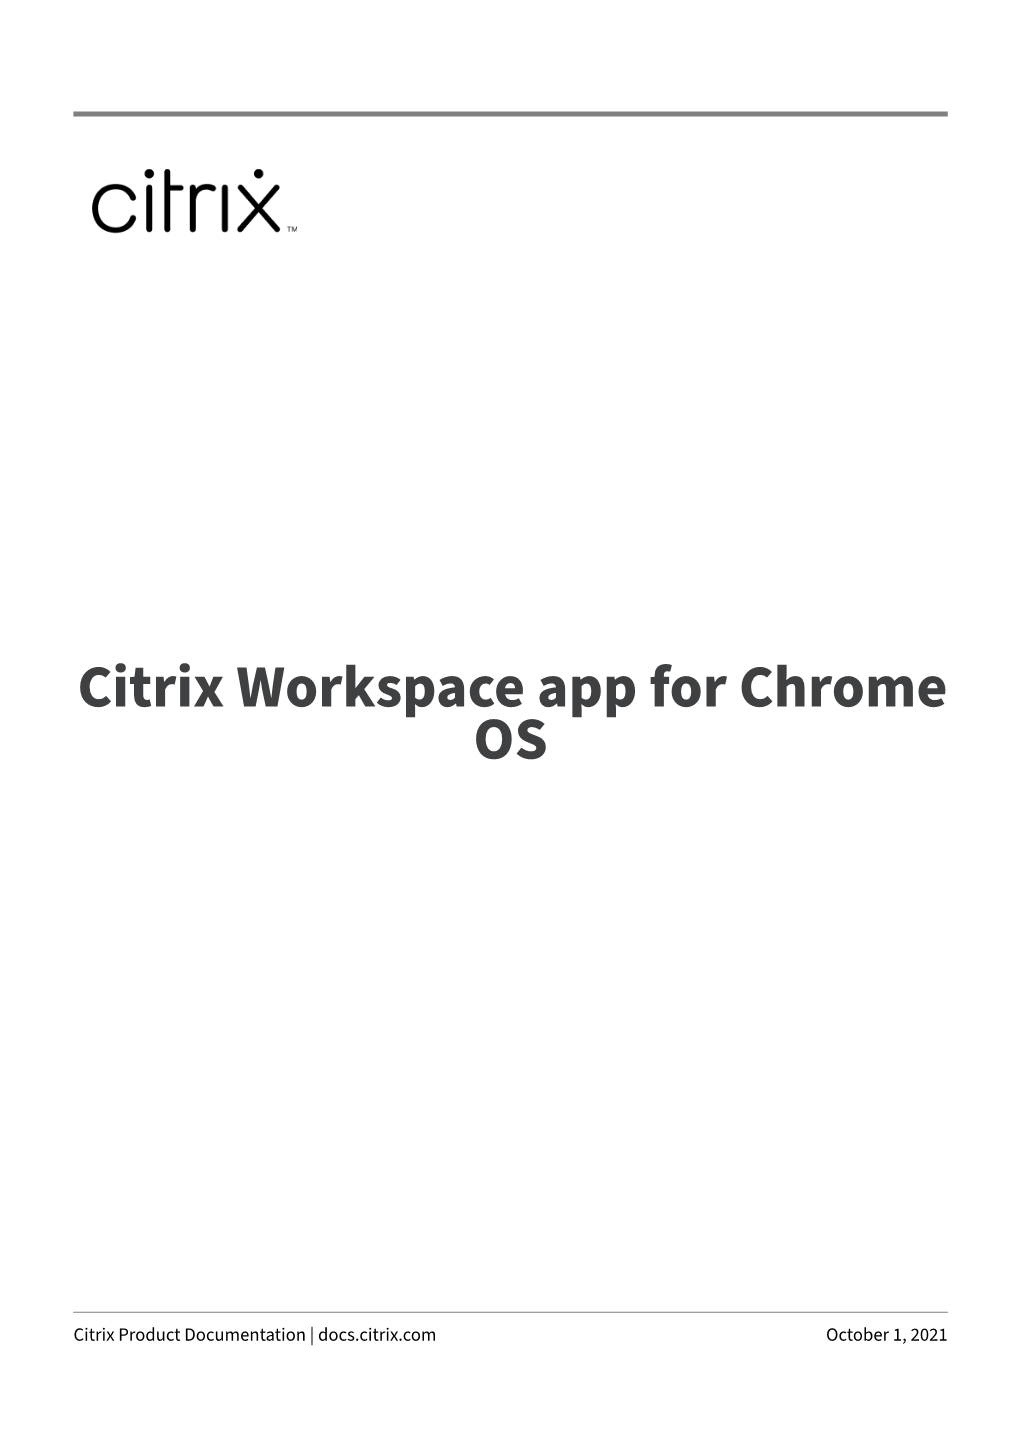 Citrix Workspace App for Chrome OS